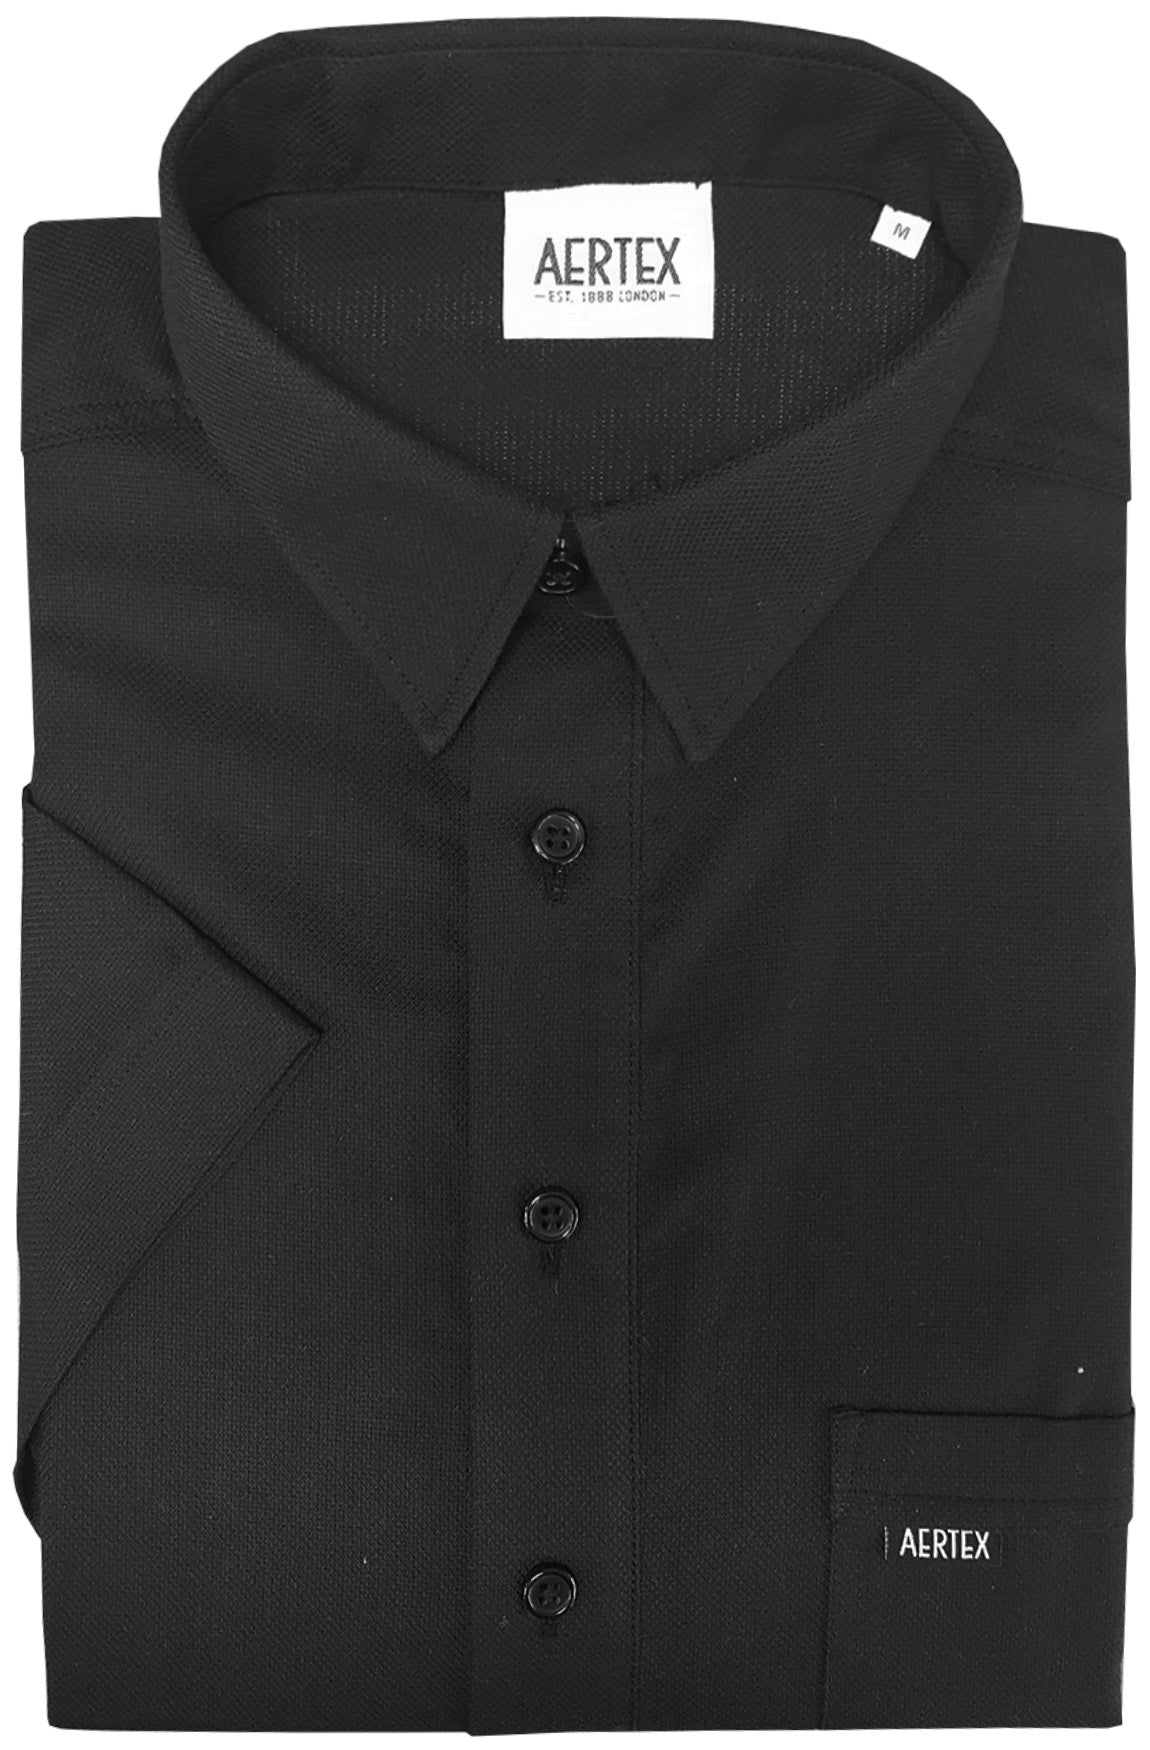 AERTEX SHIRTS – Thomson's Suits Ltd